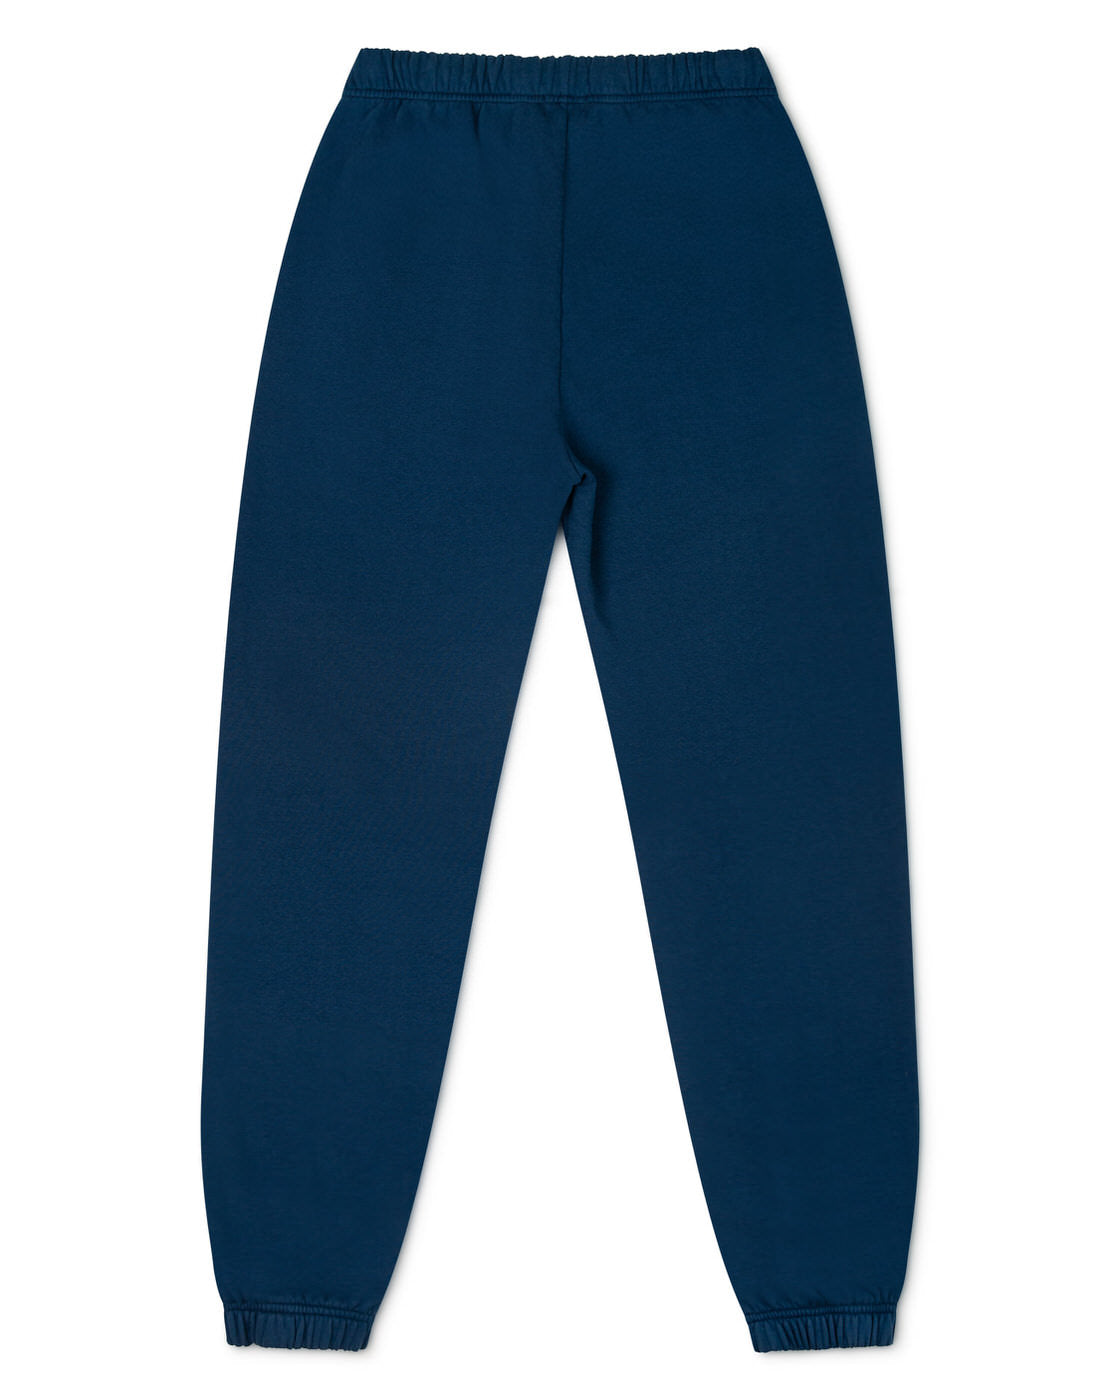 Dark blue jogging pants made of organic cotton fleece from Matona